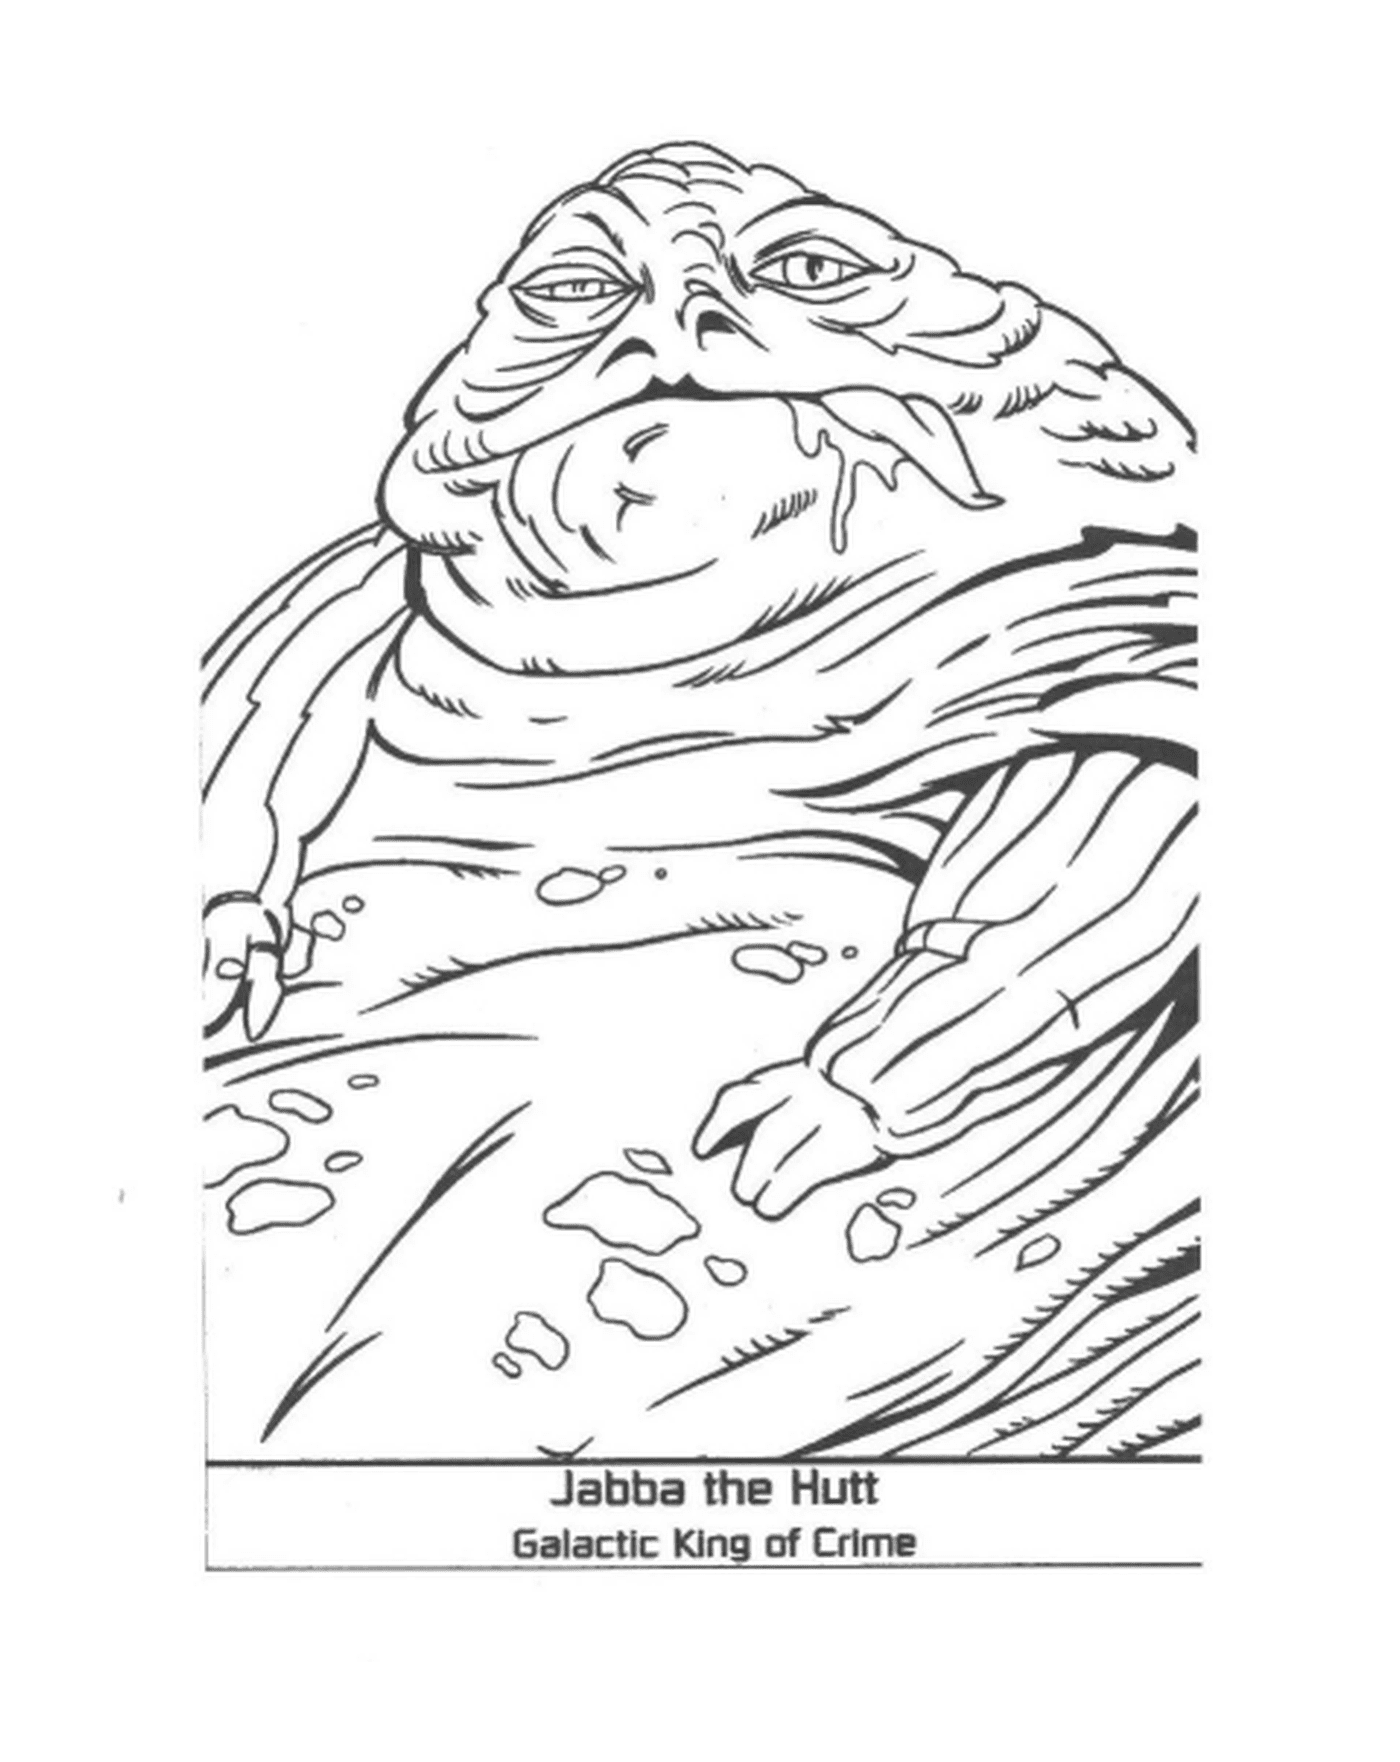  The imposing Jabba the Hutt 